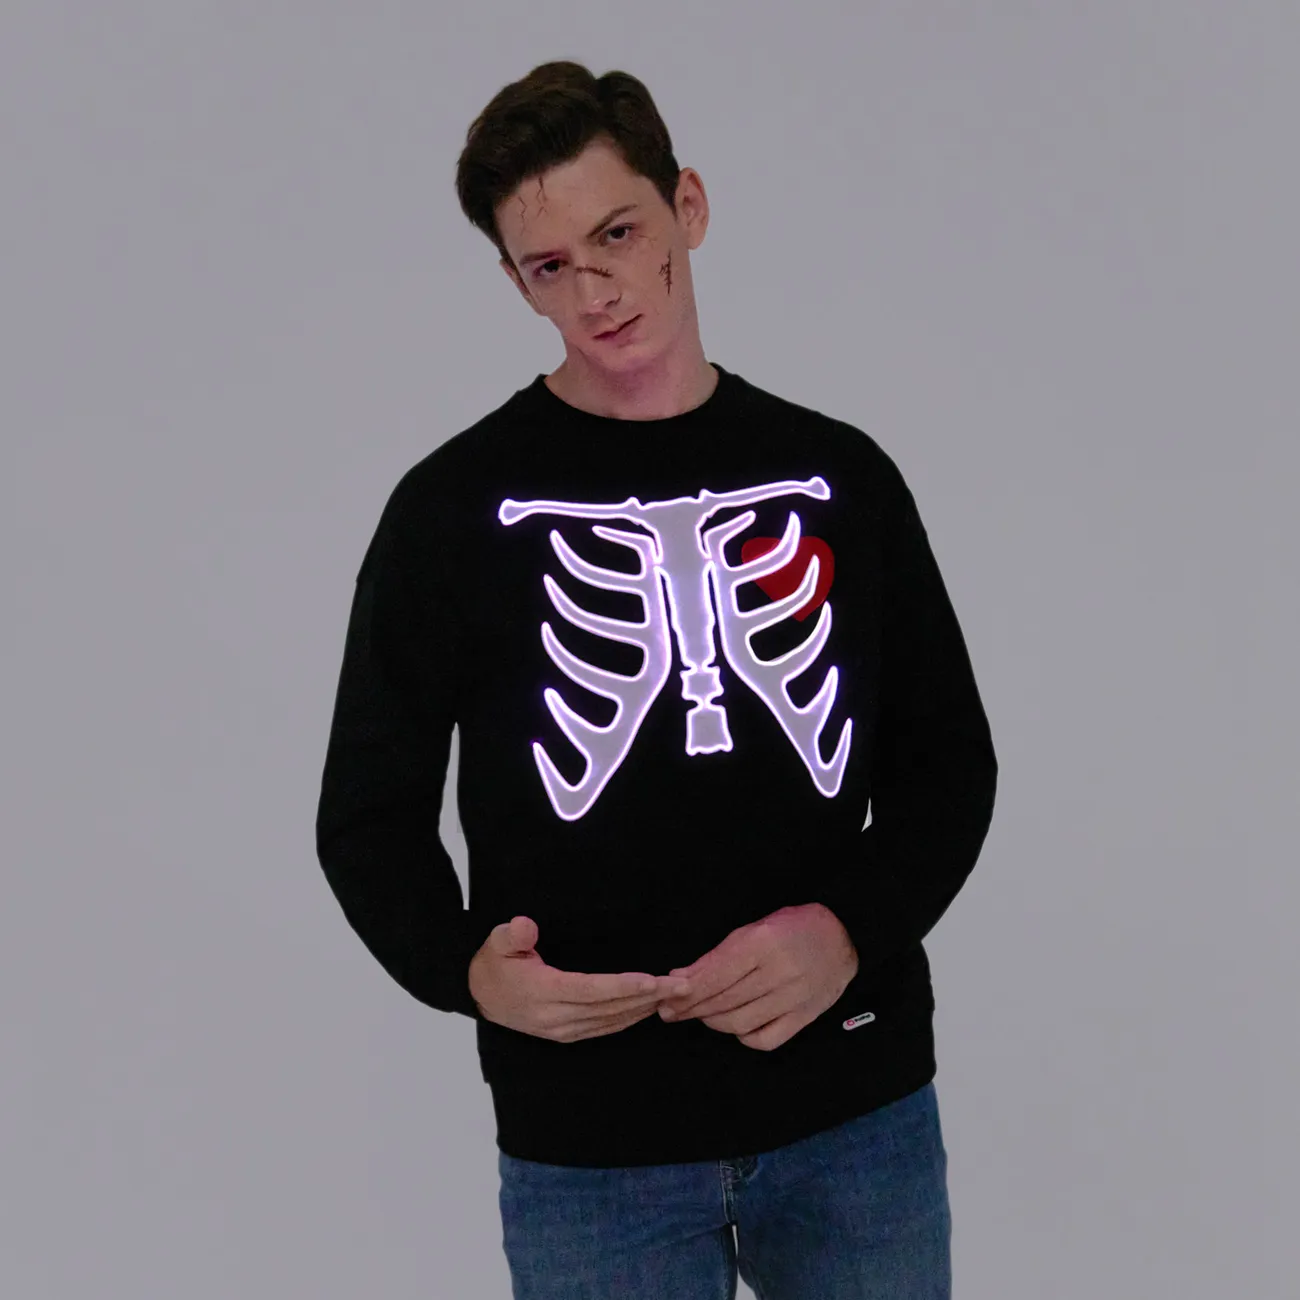 Go-Glow Halloween Illuminating Adult Sweatshirt with Light Up Skeleton Pattern for Men Including Controller (Built-In Battery) Black big image 1